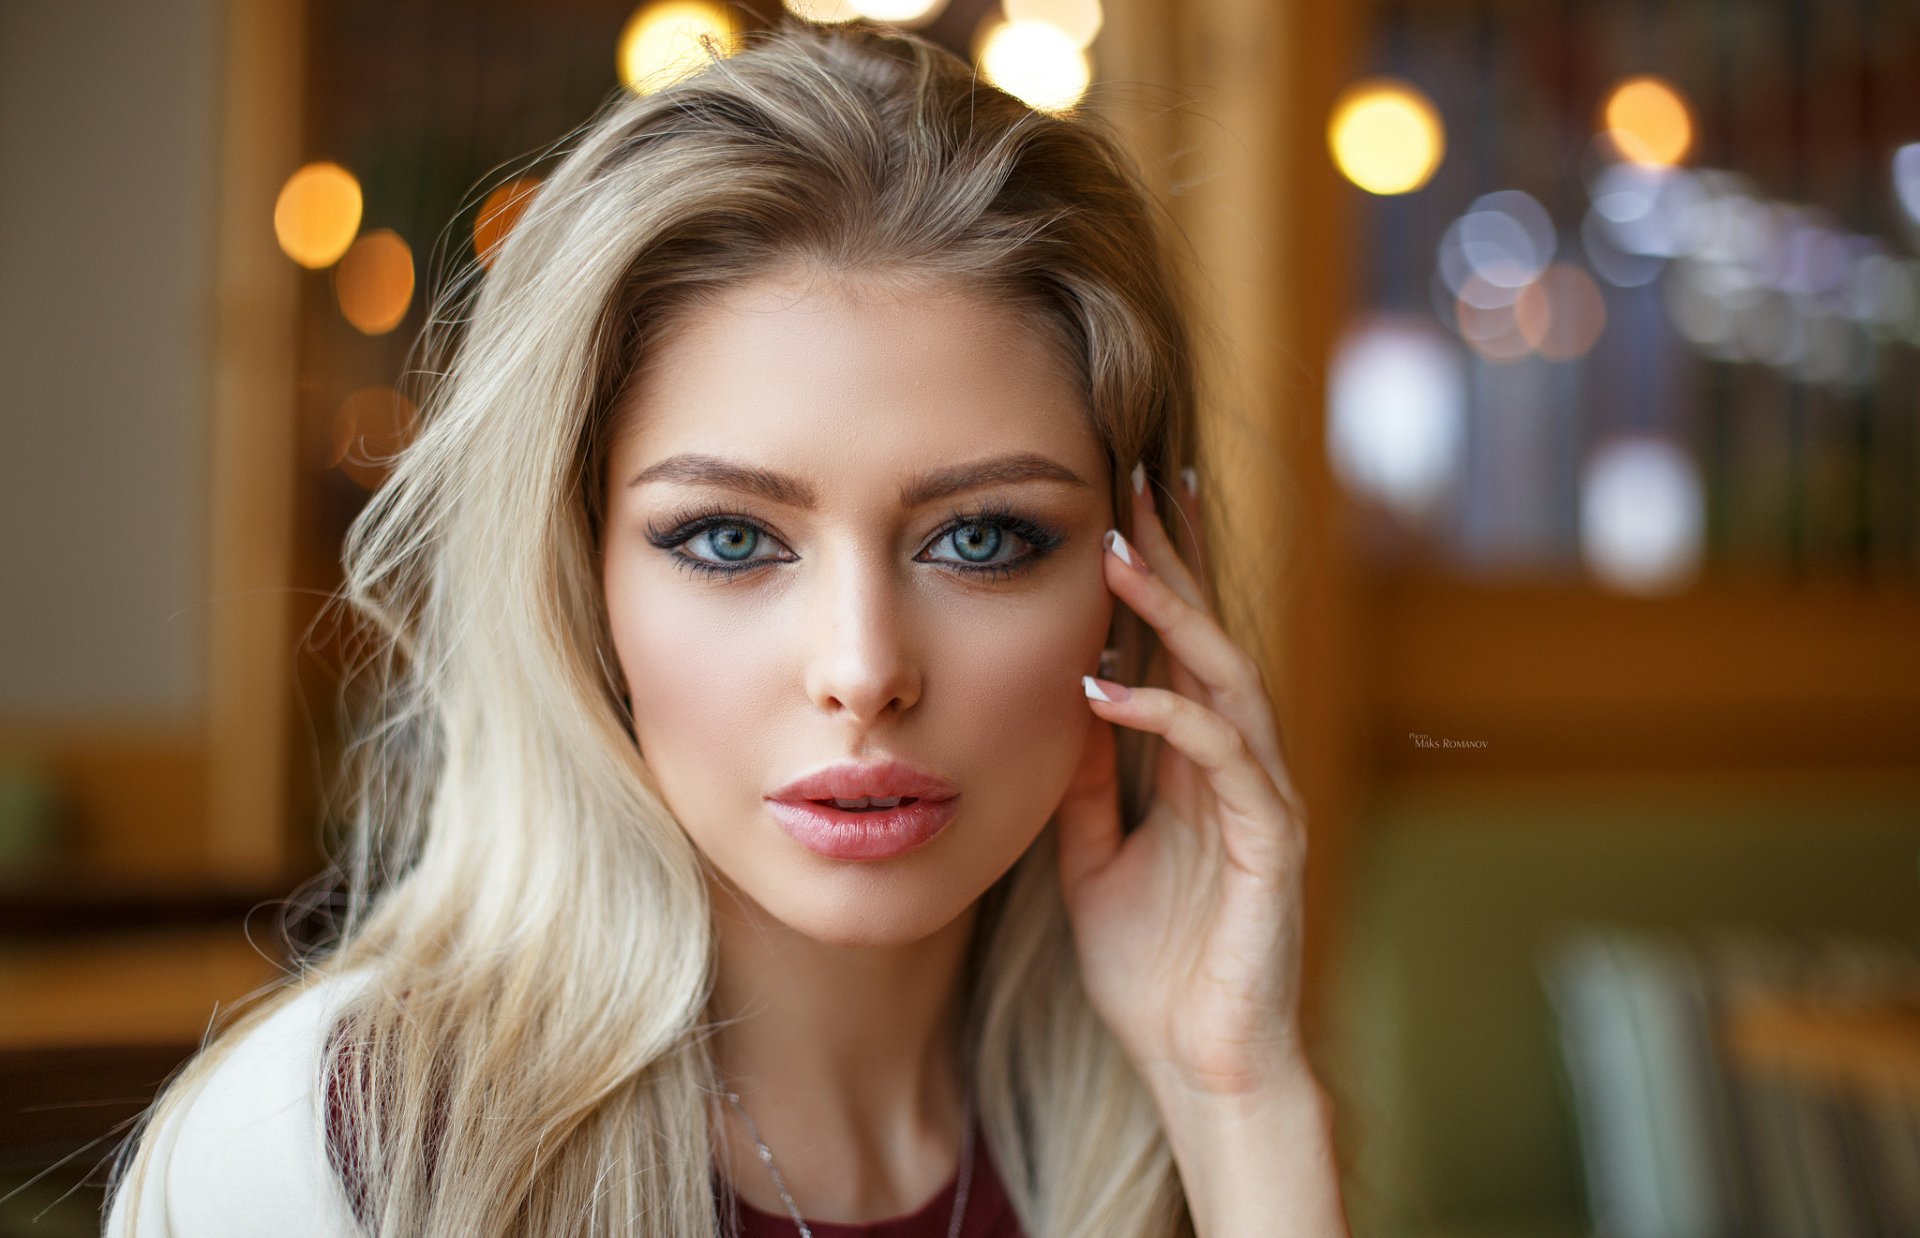 Download Bokeh Depth Of Field Close Up Face Lipstick Blue Eyes Blonde Woman Model Hd Wallpaper